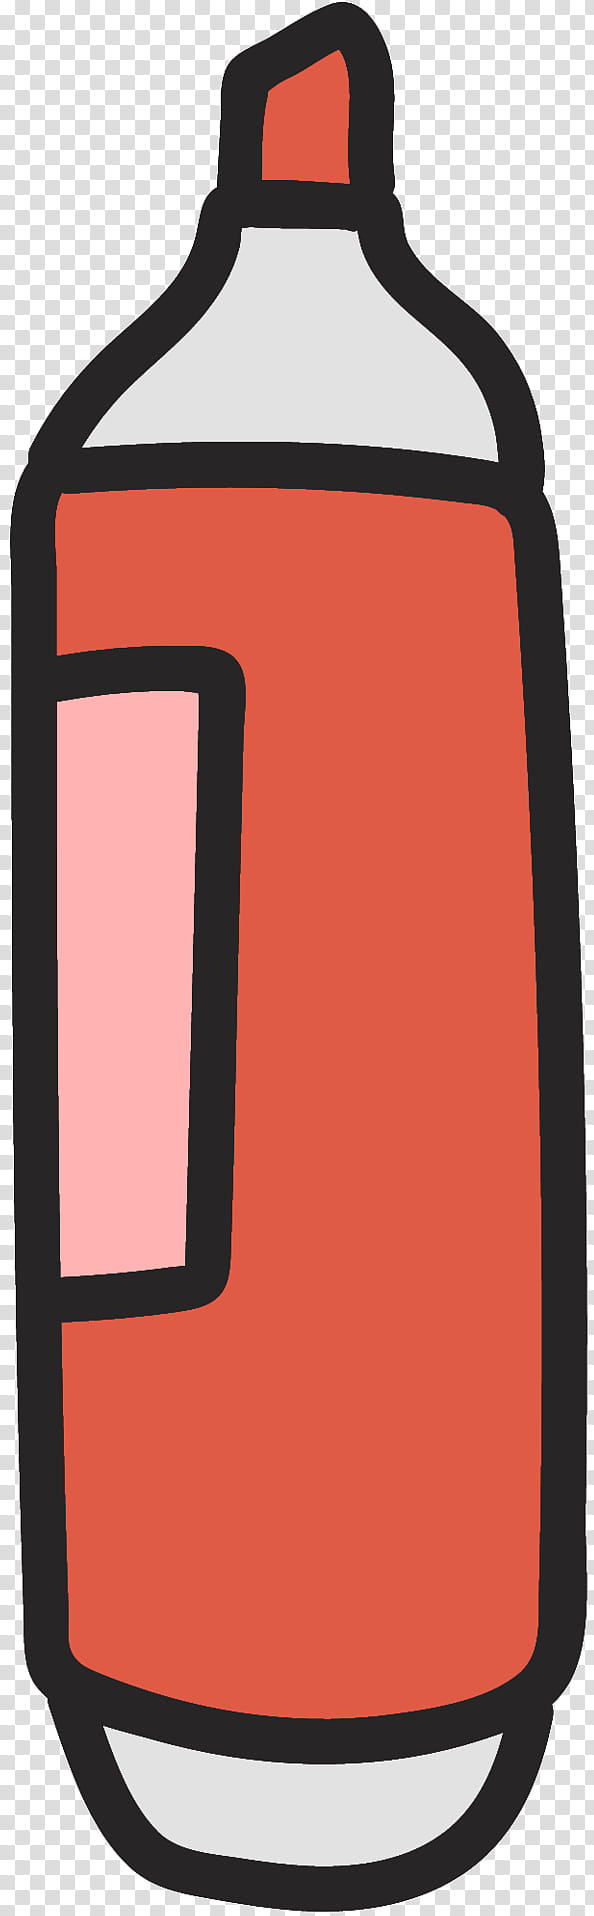 Red, Stationery, Doodle, Orange, Handheld Device Accessory, Ebook Reader Case, Rectangle transparent background PNG clipart